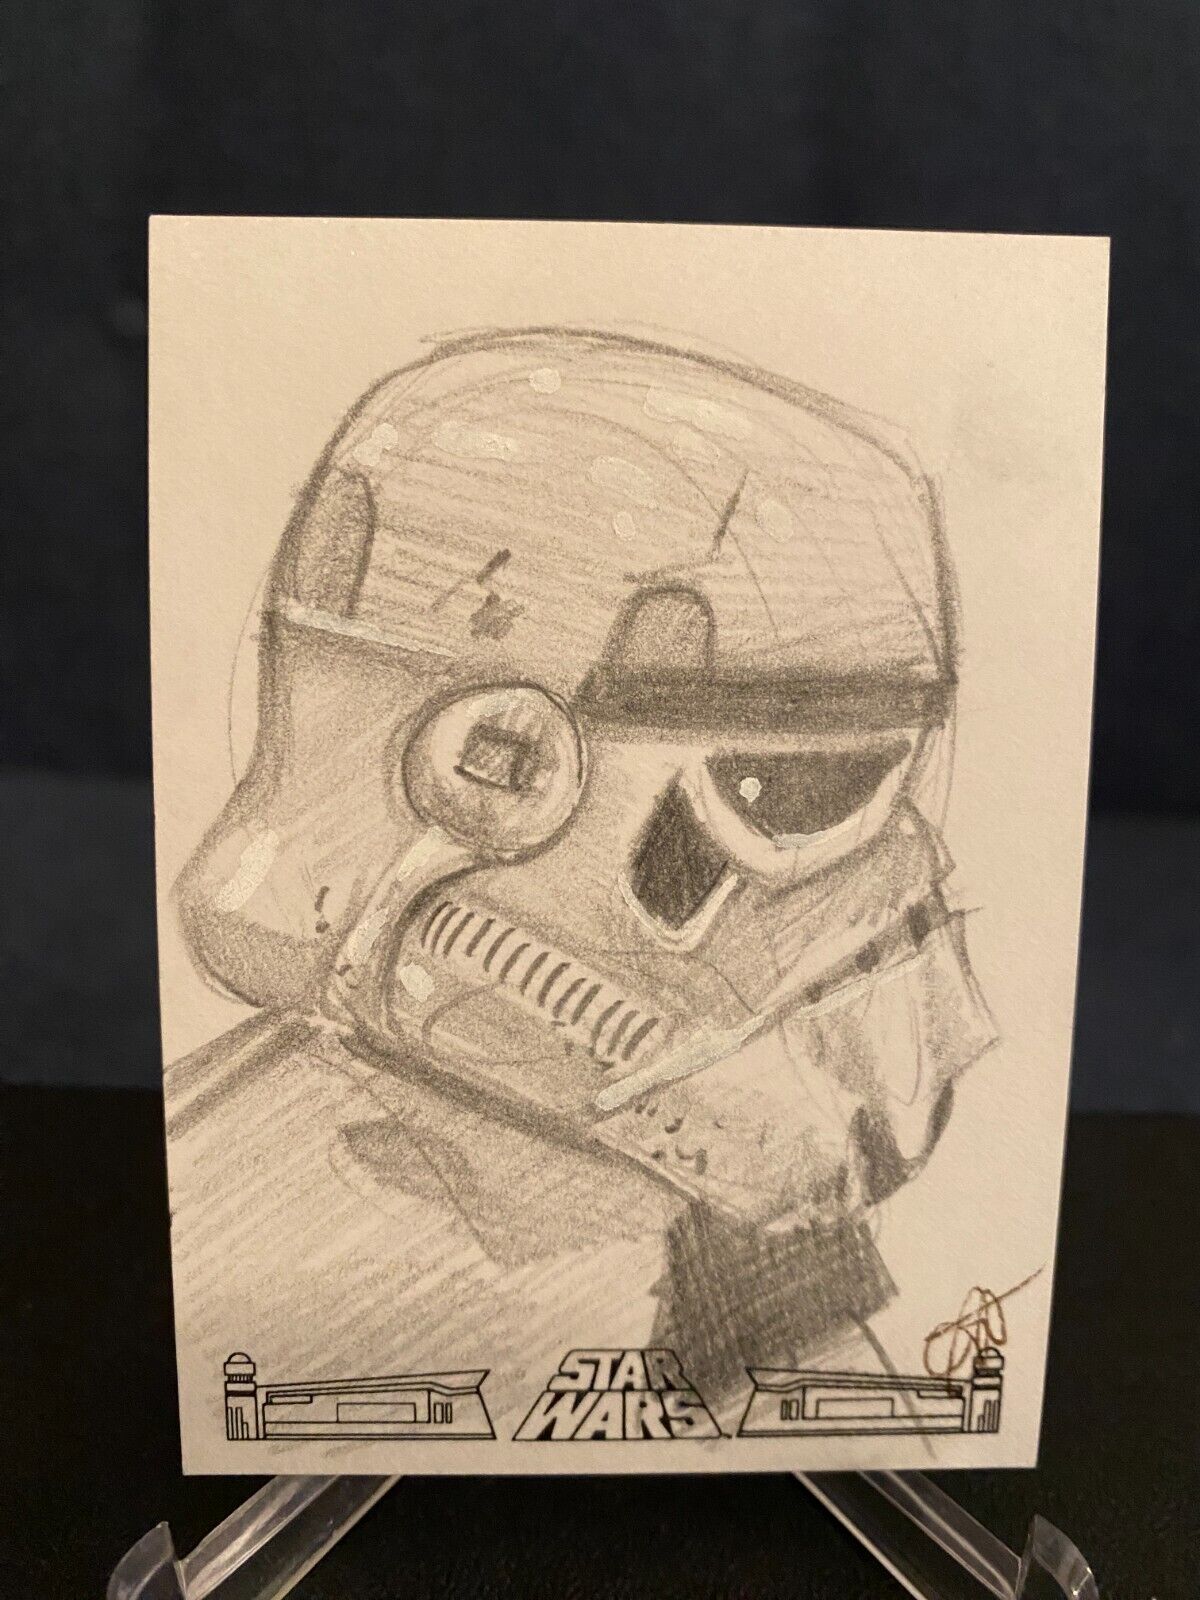 2017 Topps Star Wars 40th Anniversary Sketch Cards 1/1 Jessica Hickman Auto